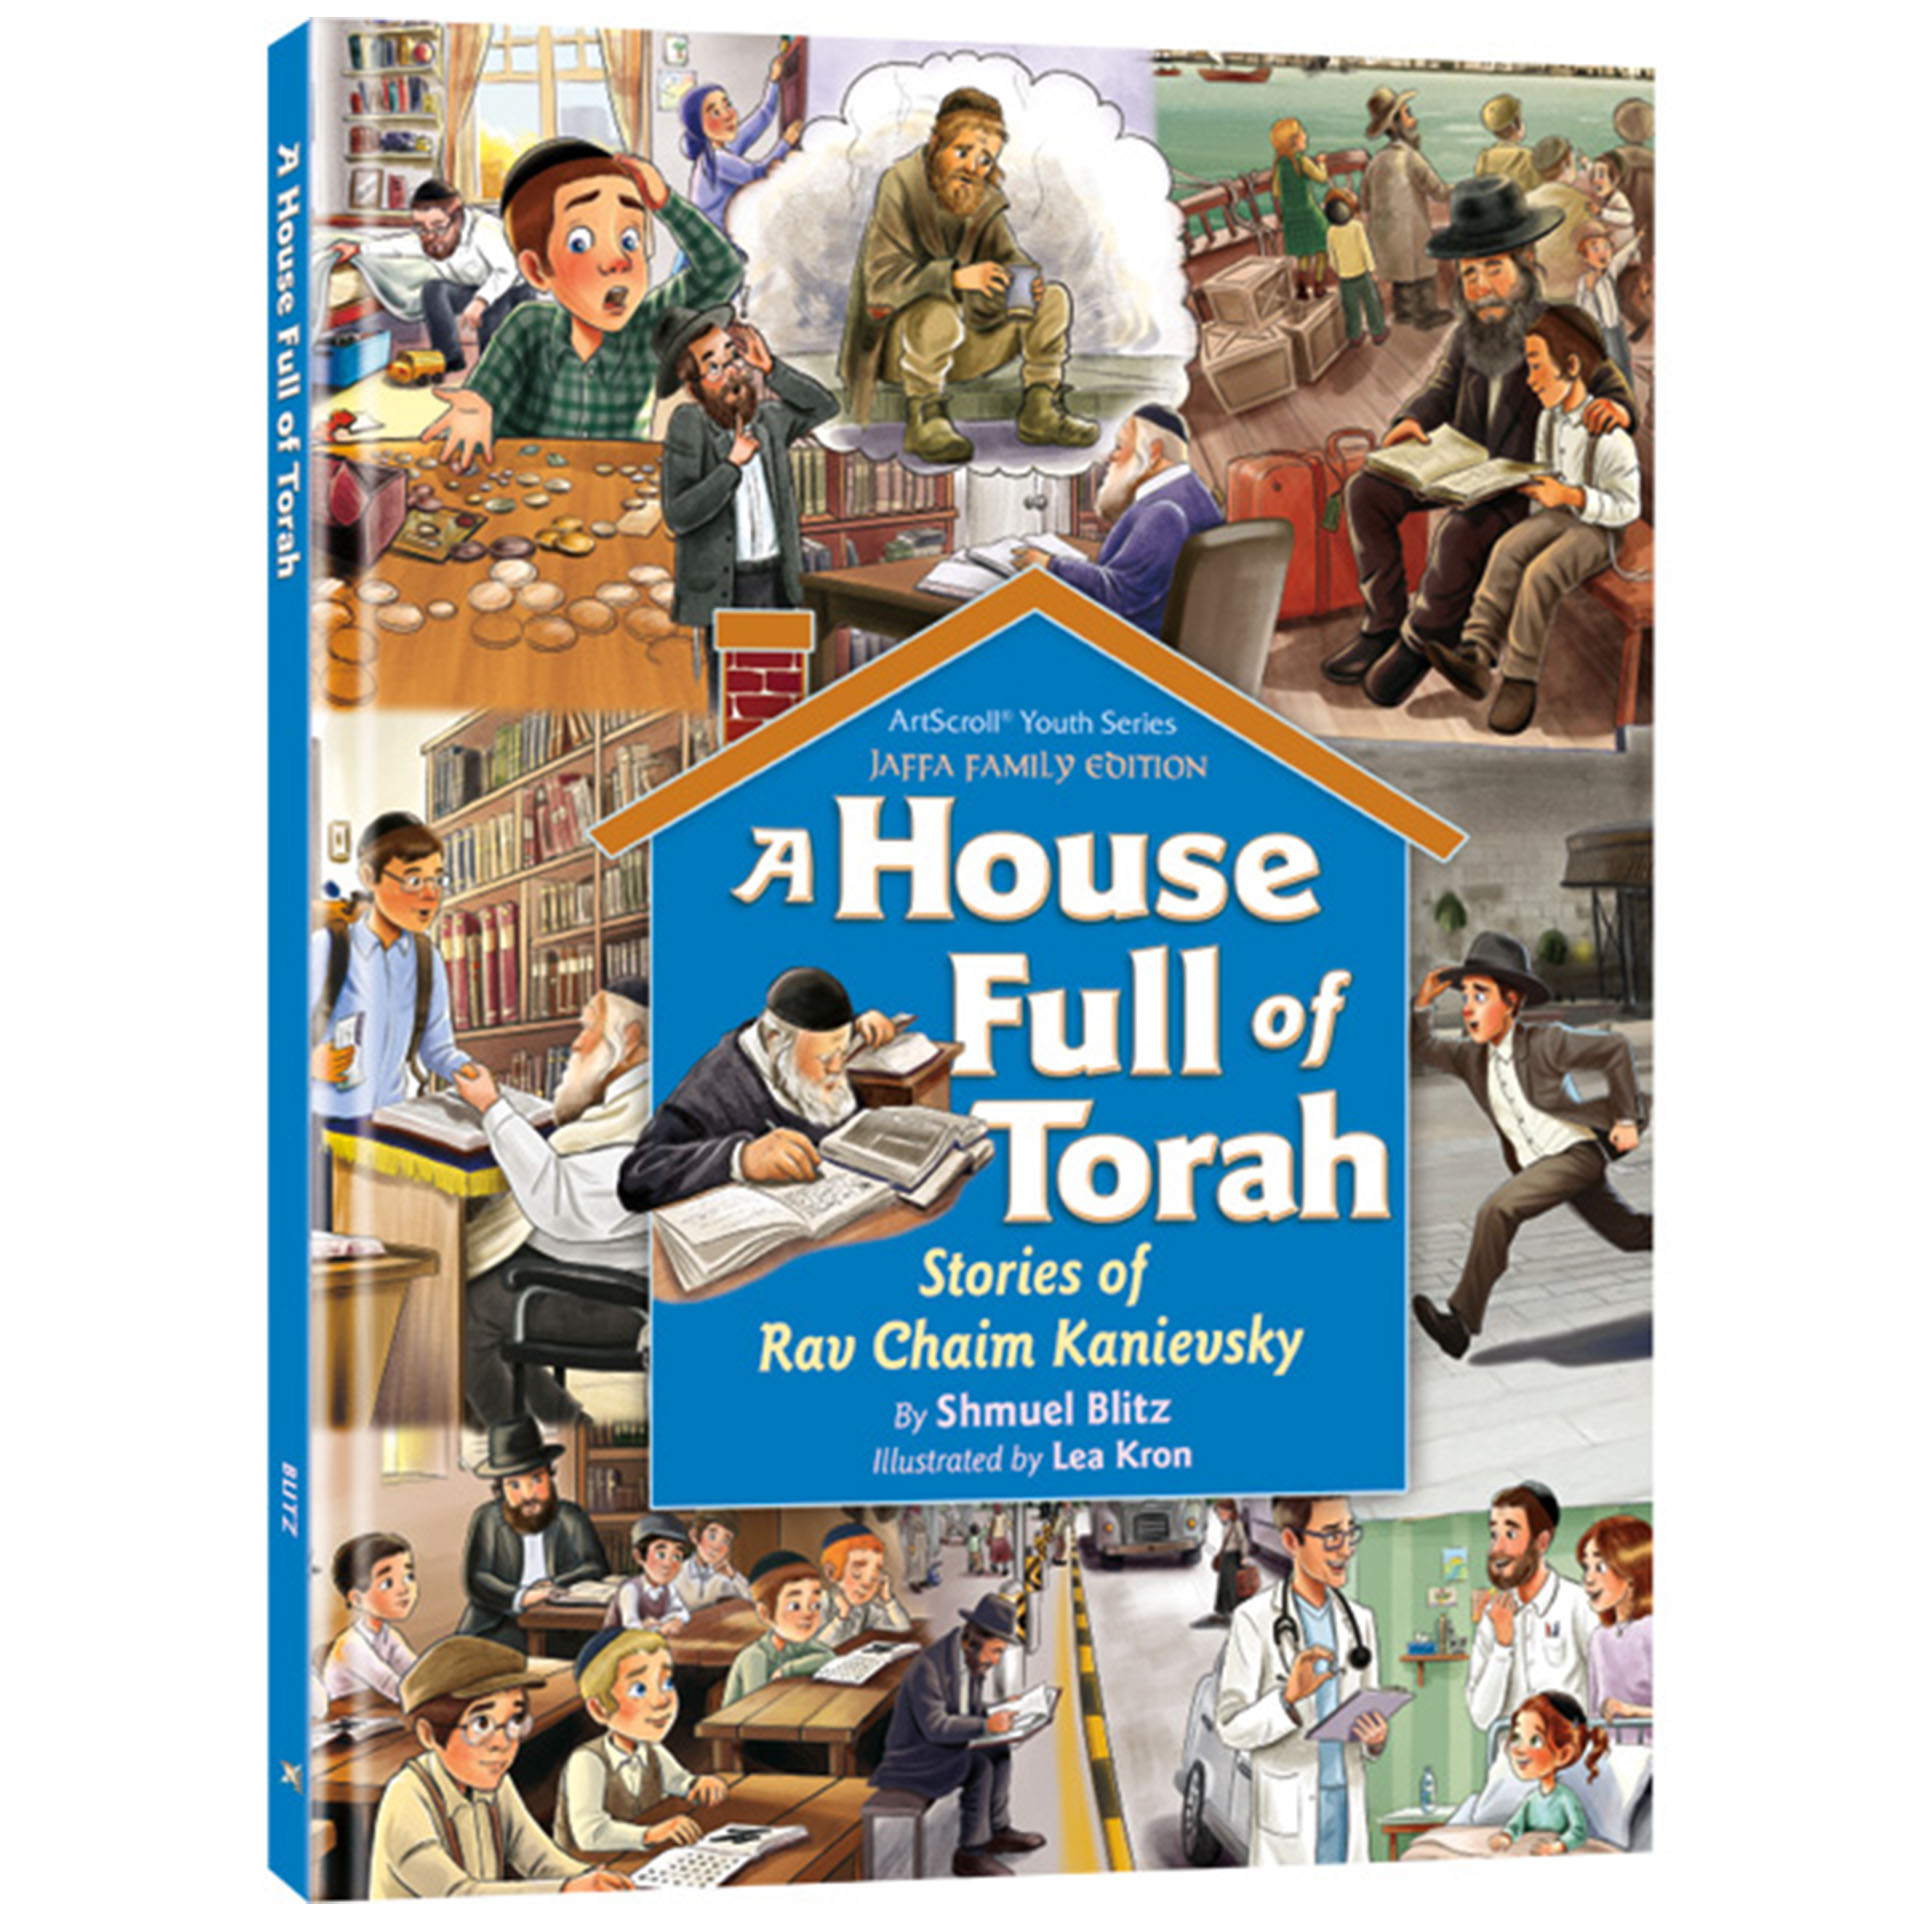 A HOUSE FULL OF TORAH